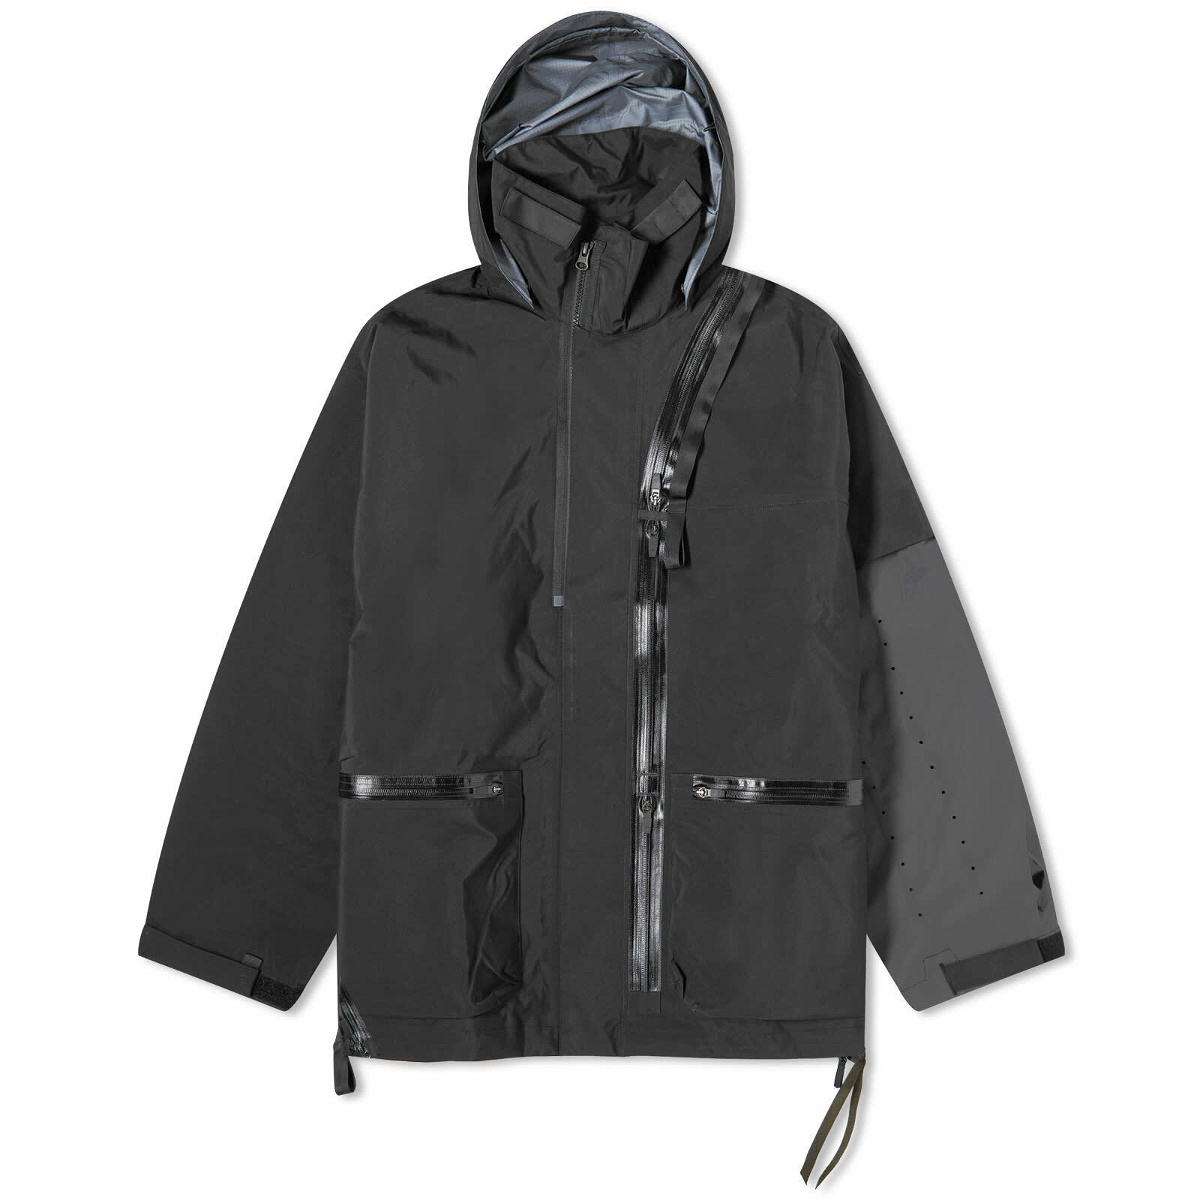 Acronym Men's 3L Gore-Tex Pro Interops Hard Shell Jacket in Black